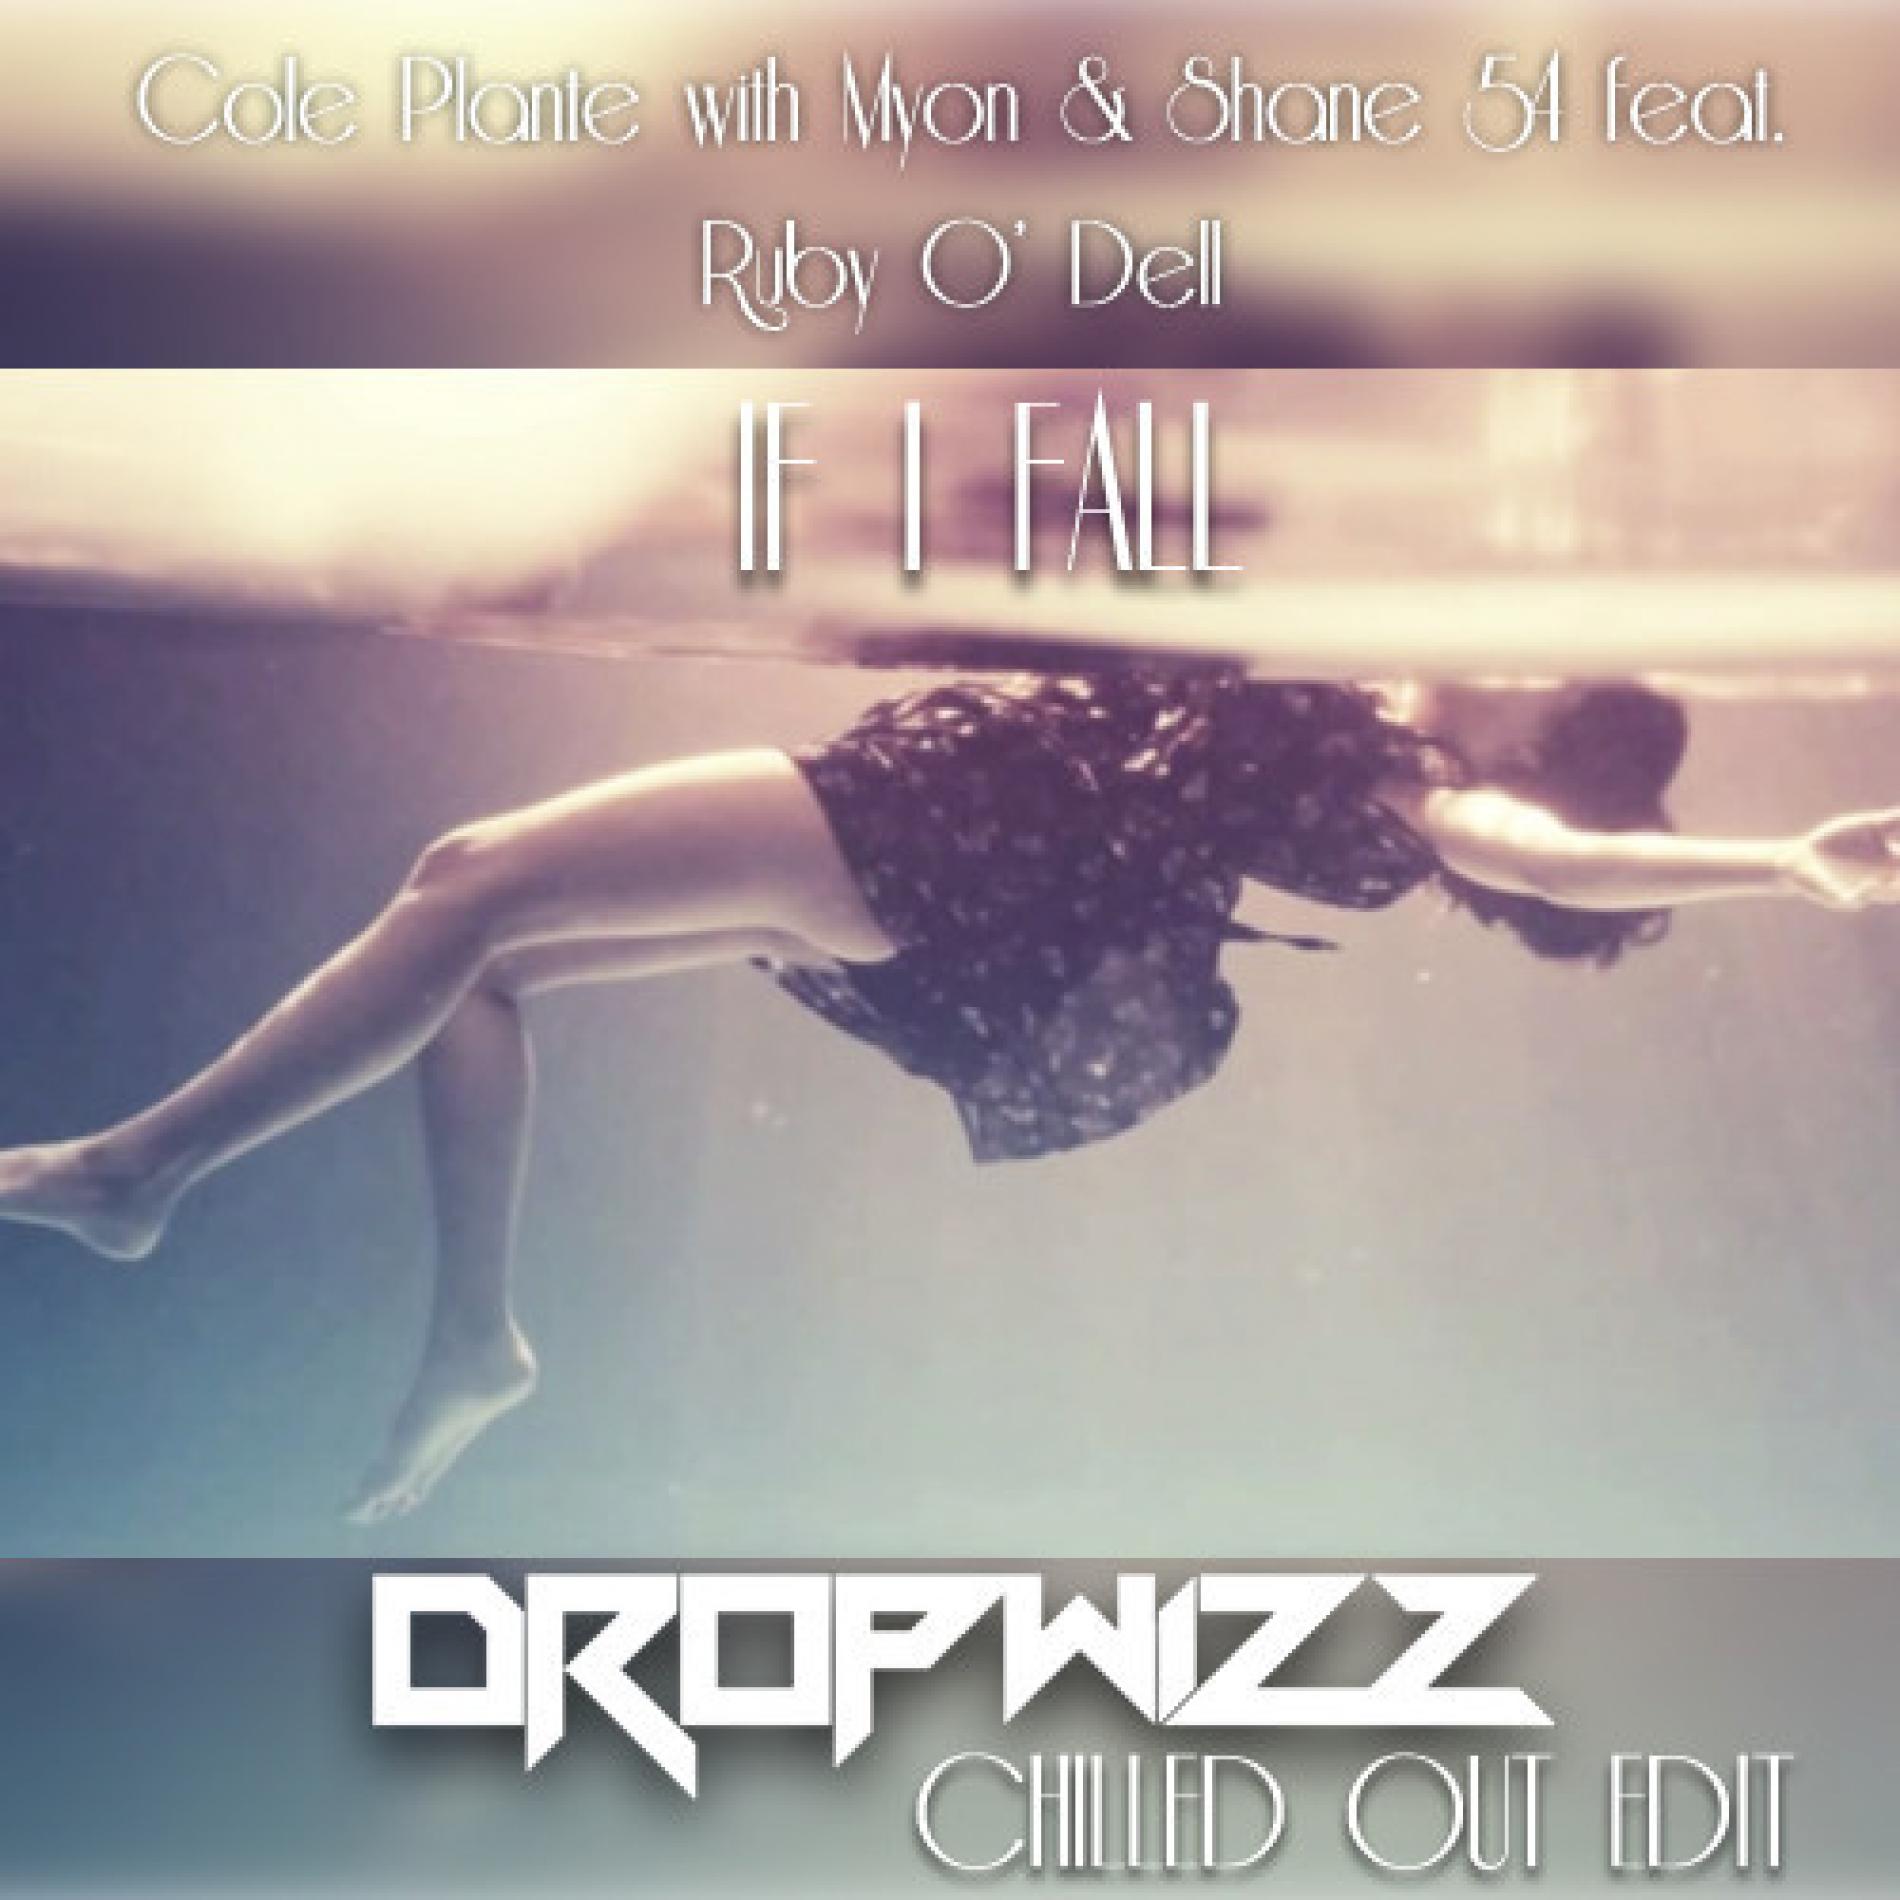 Myon & Shane 54 ft. Cole Plante & Ruby O’Dell – If I Fall (Dropwizz Chilled Trapleg)